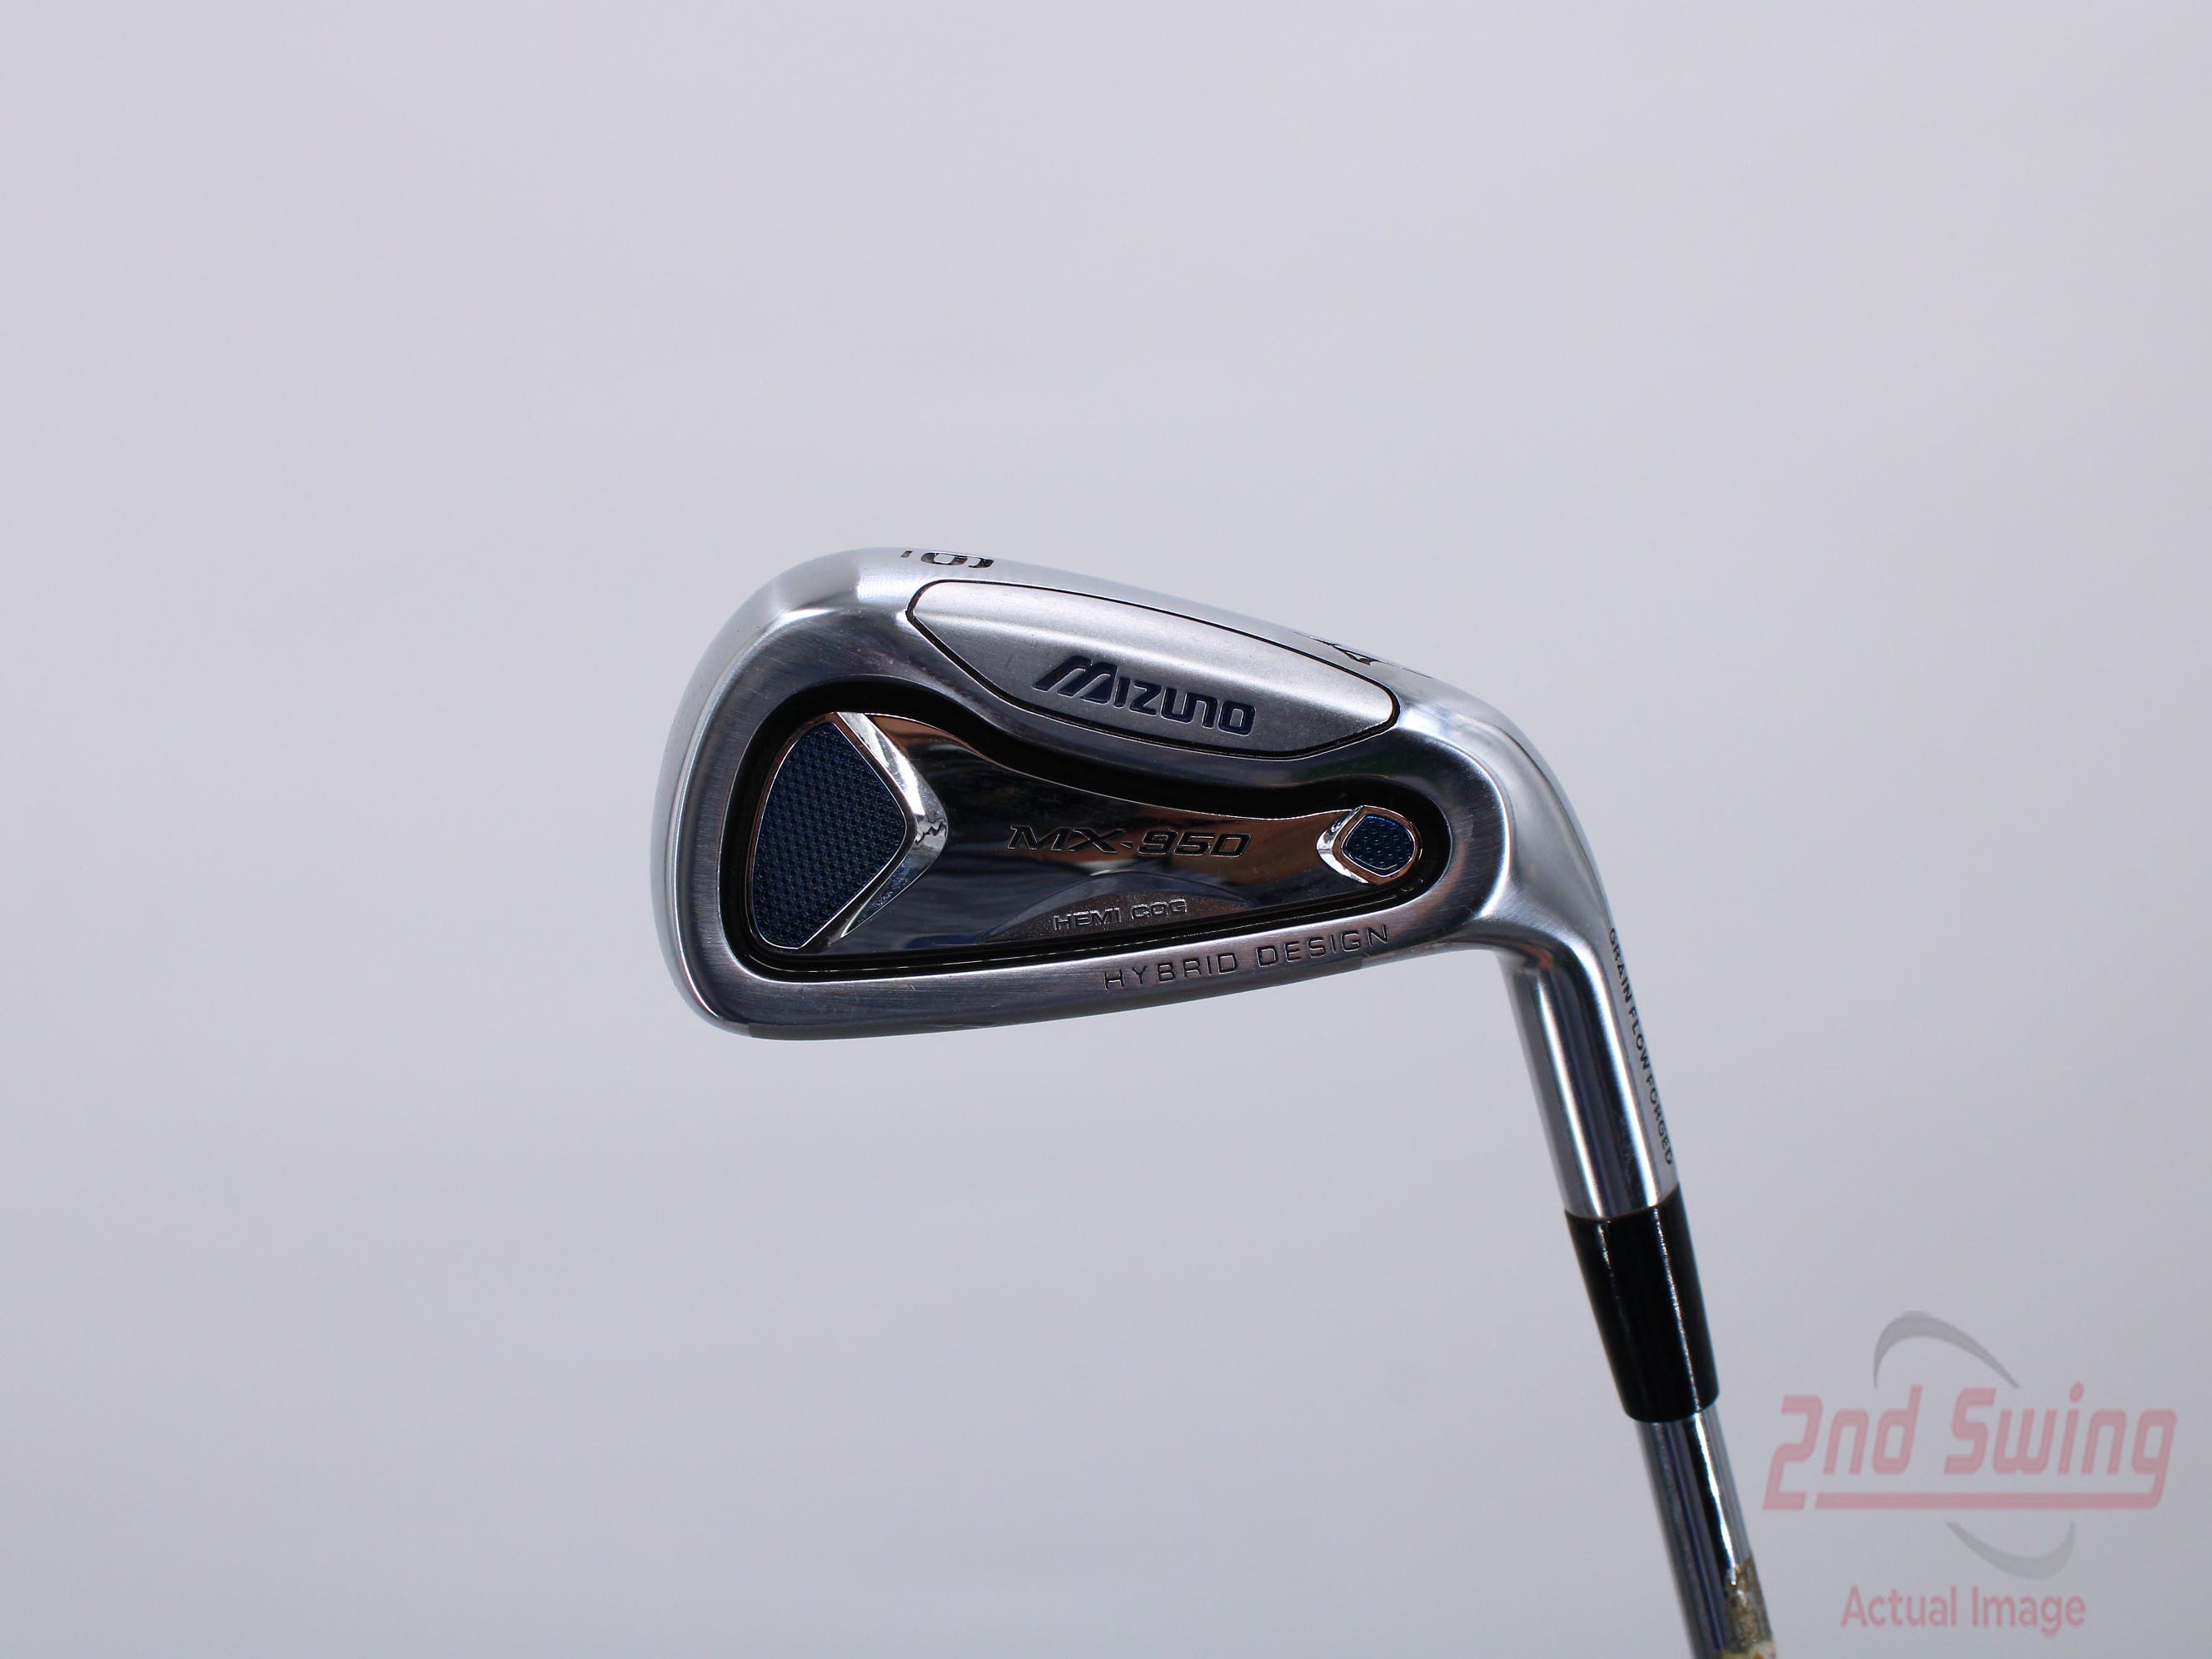 Mizuno MX 950 Single Iron (T0089057) | 2nd Golf